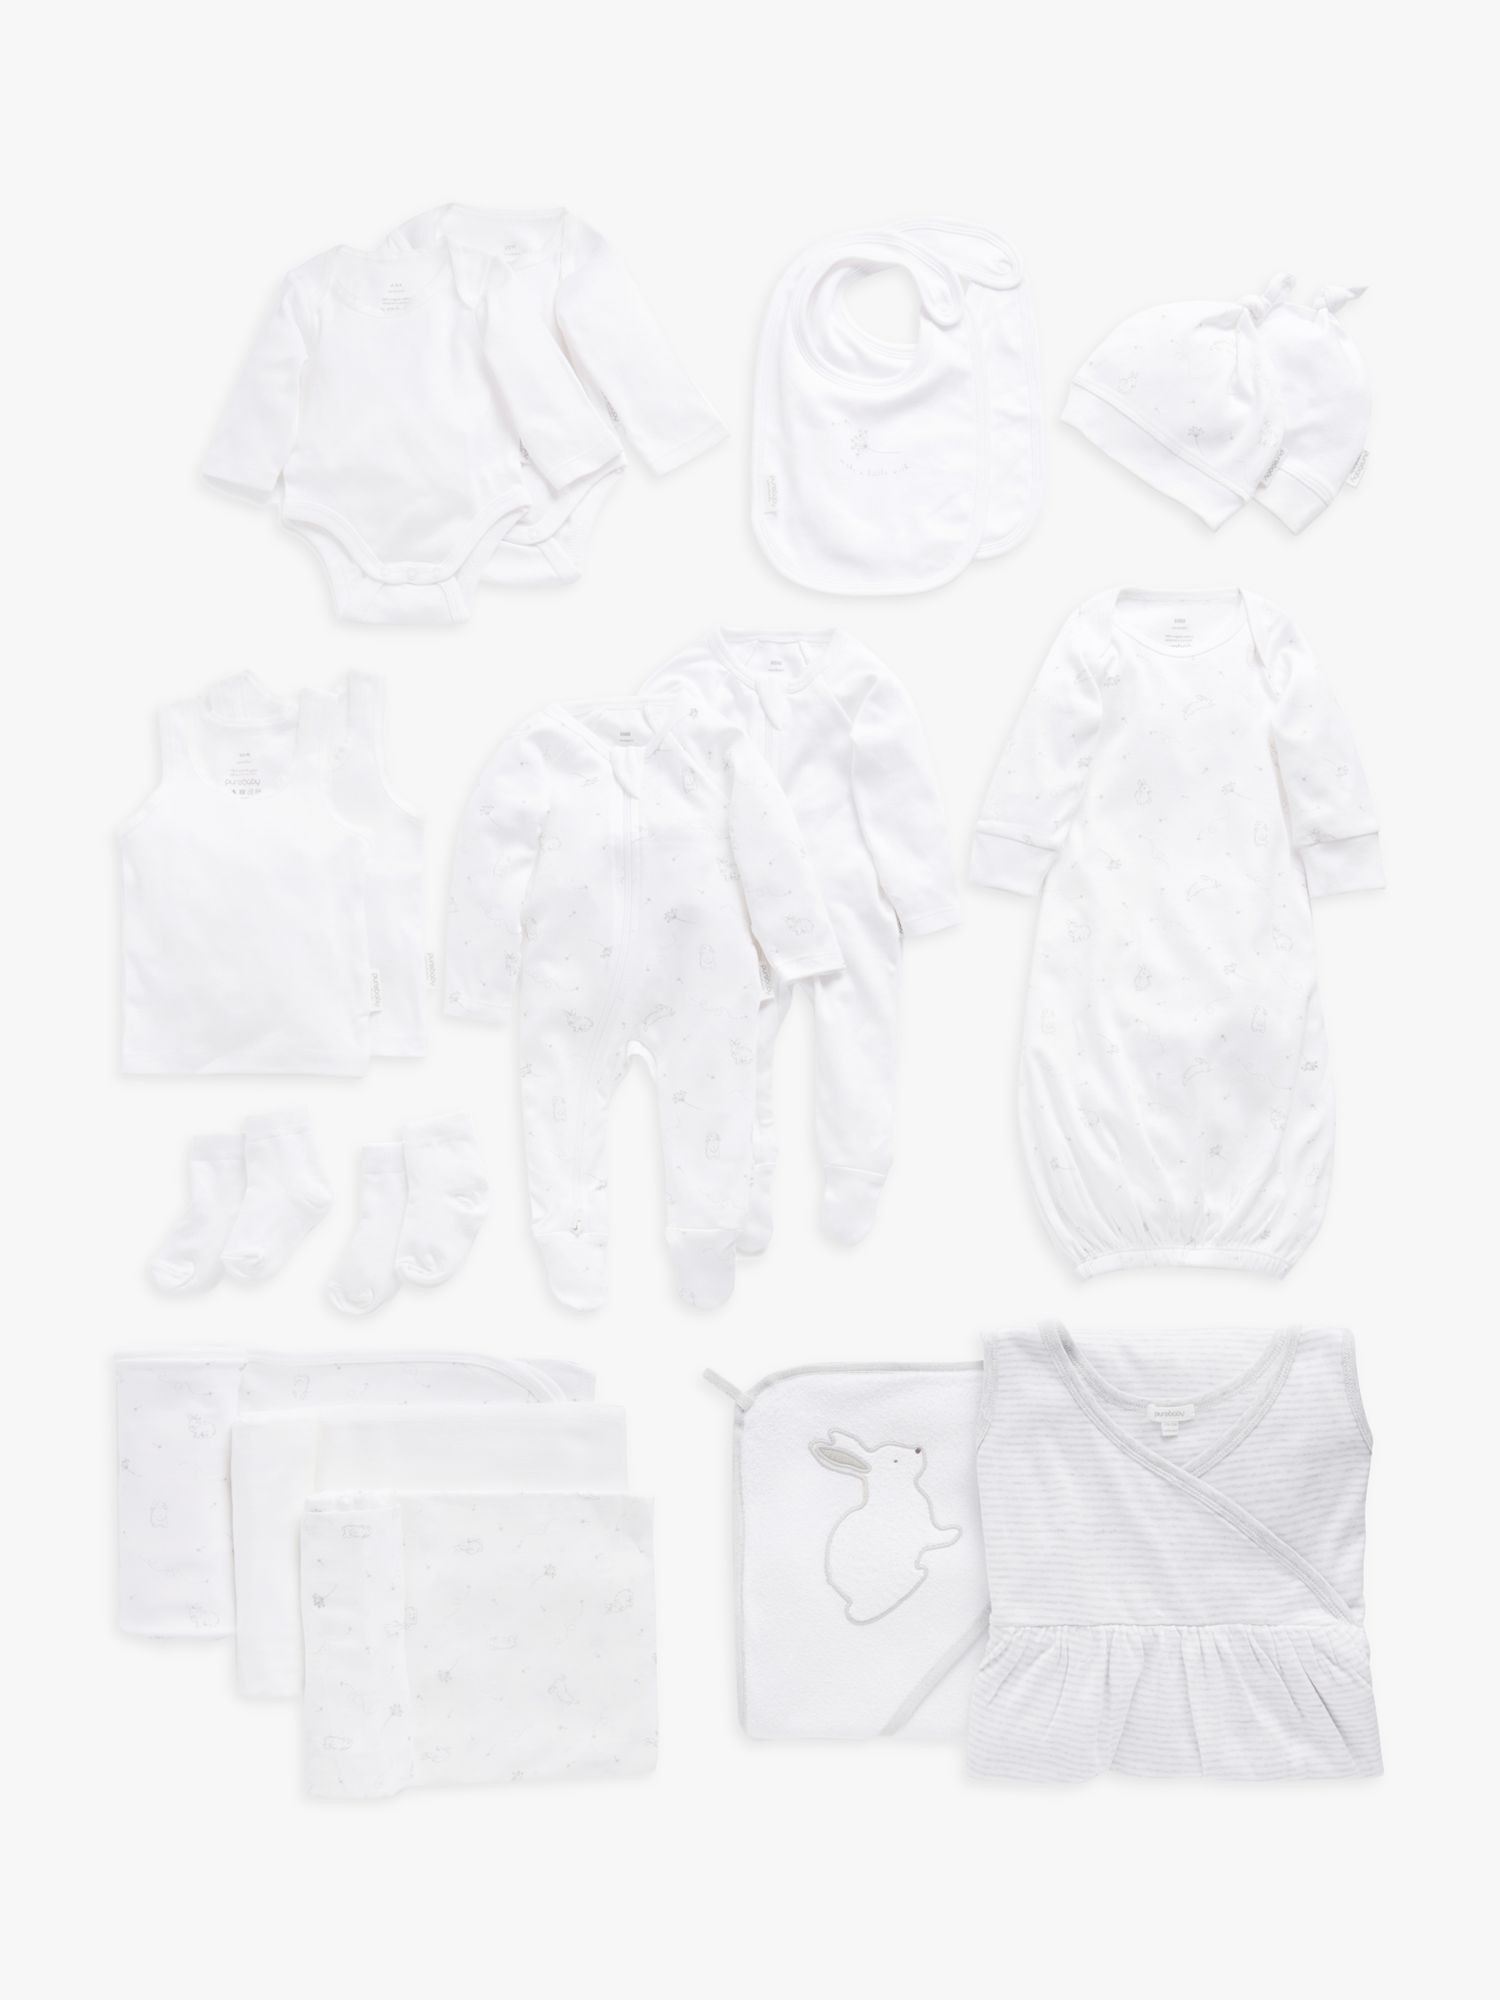 Purebaby GOTS Organic Cotton Essentials Newborn Hospital Gift Set, Pack of 16, White